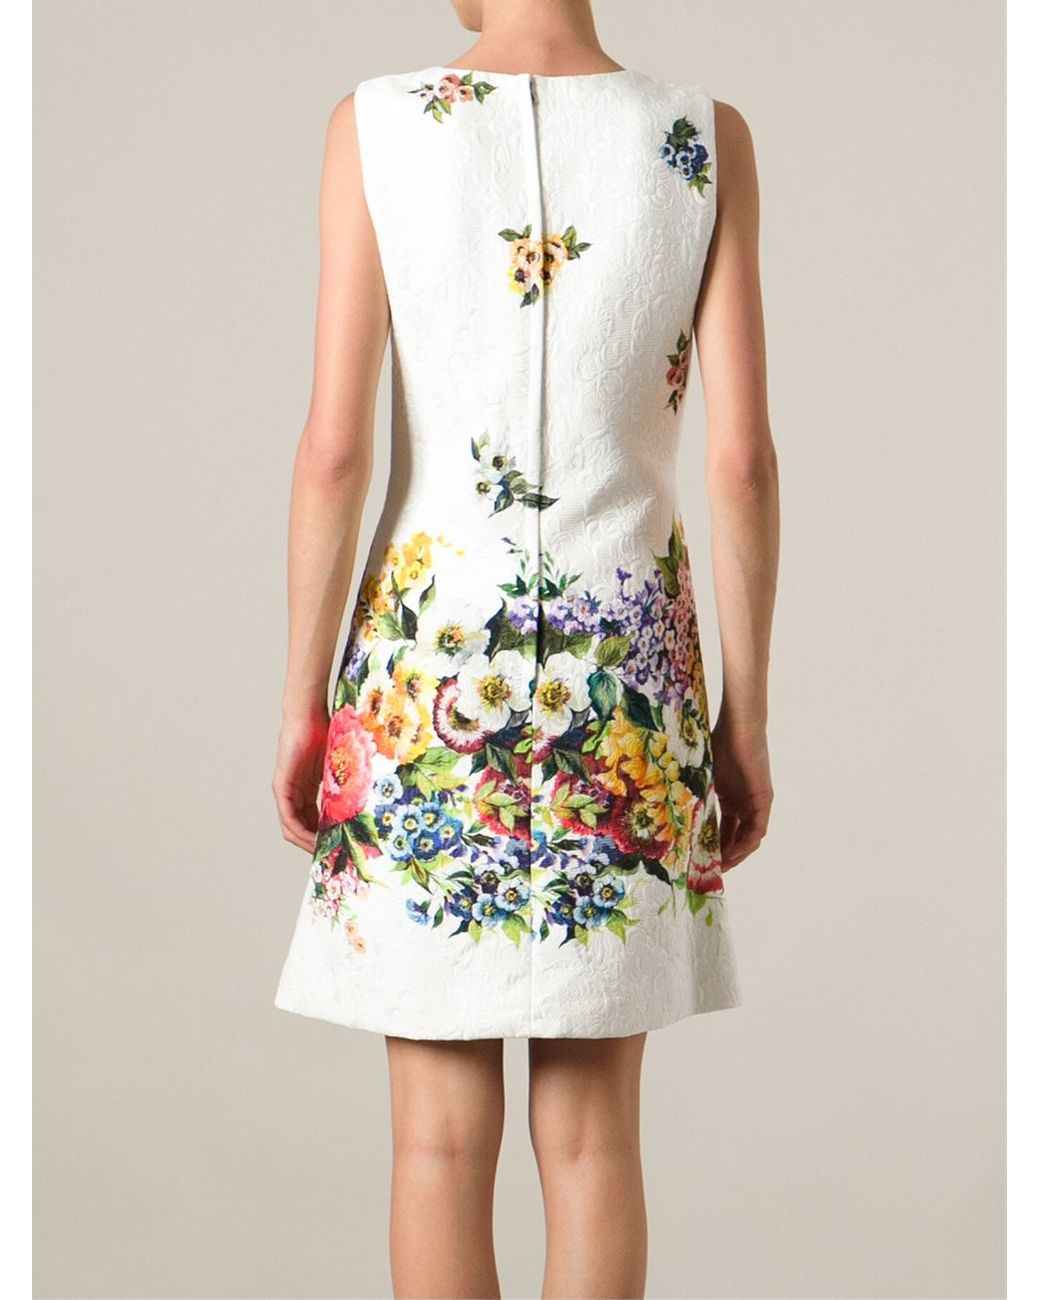 Dolce & Gabbana Floral Print Dress in White | Lyst